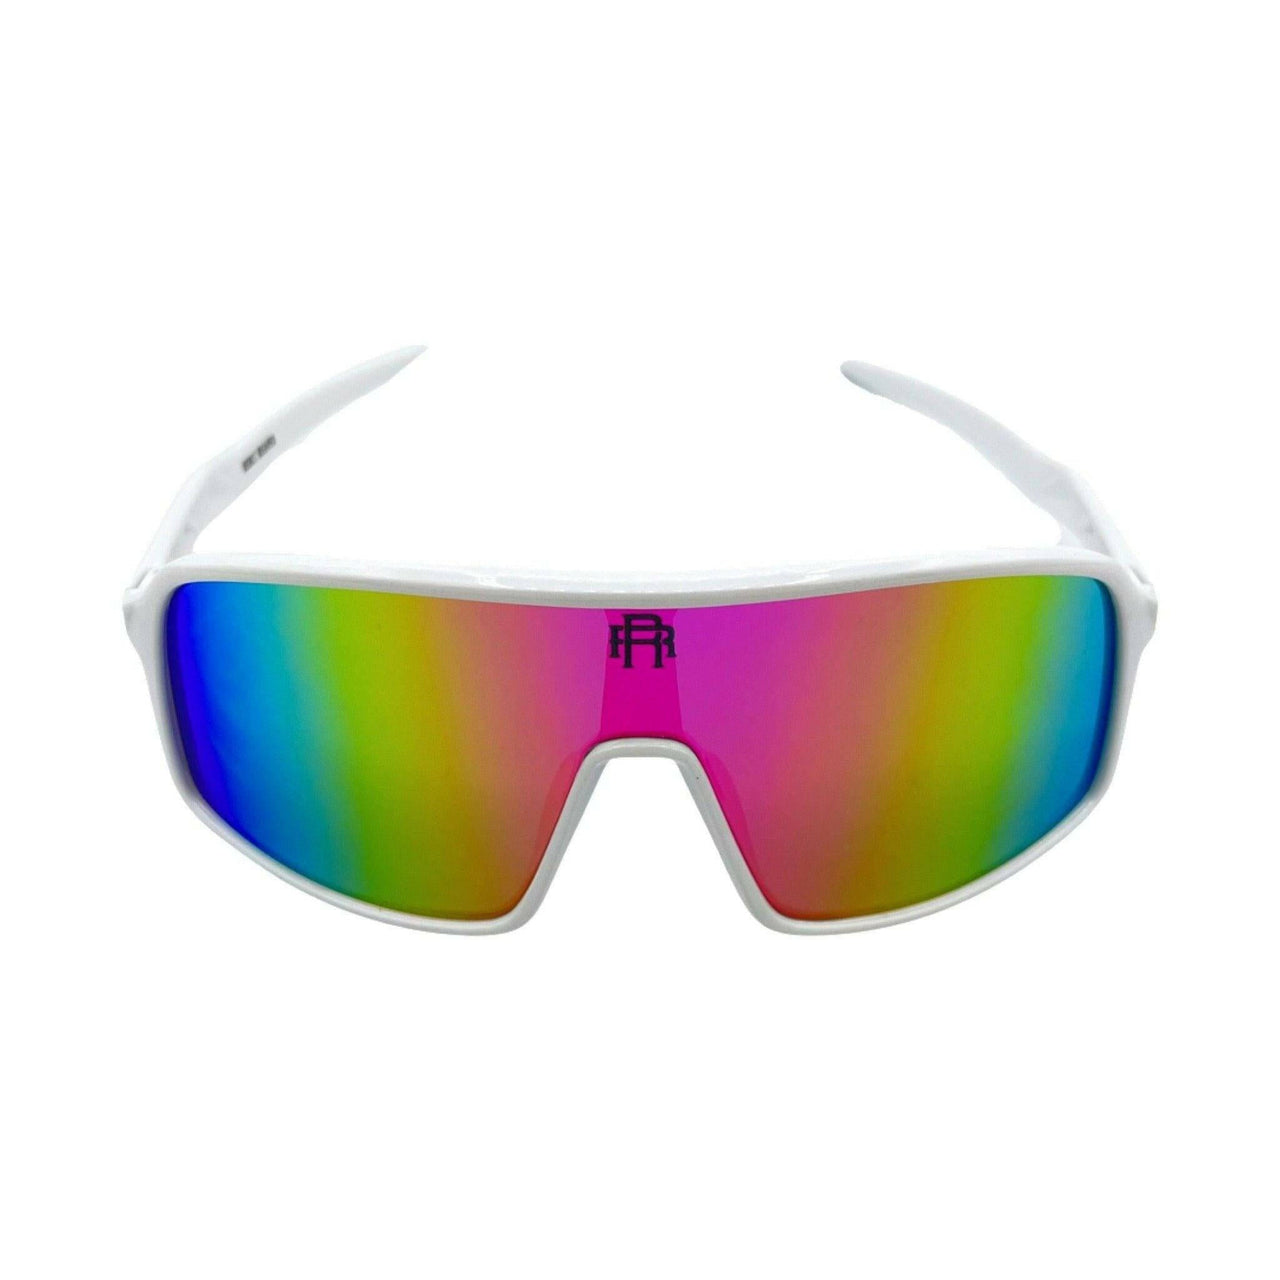 Yeti White & Pink Polarized Lens Sunglasses - Rebel Reaper Clothing CompanySunglasses